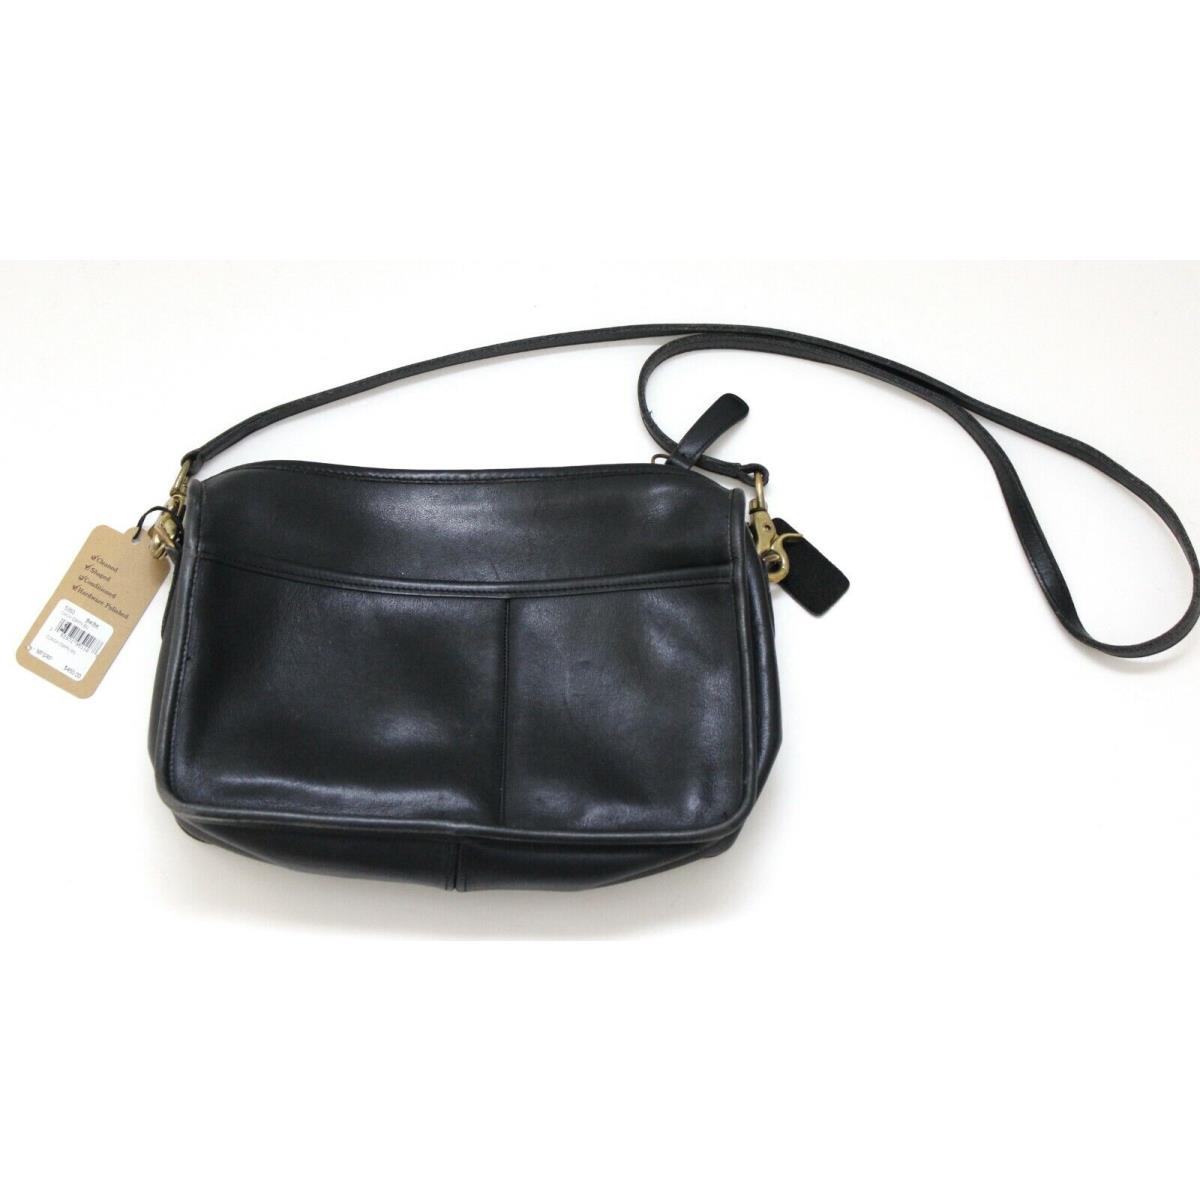 Restored Coach Glovetanned Black Leather Companion Bag 5350 - Coach bag -  193971951188 | Fash Brands